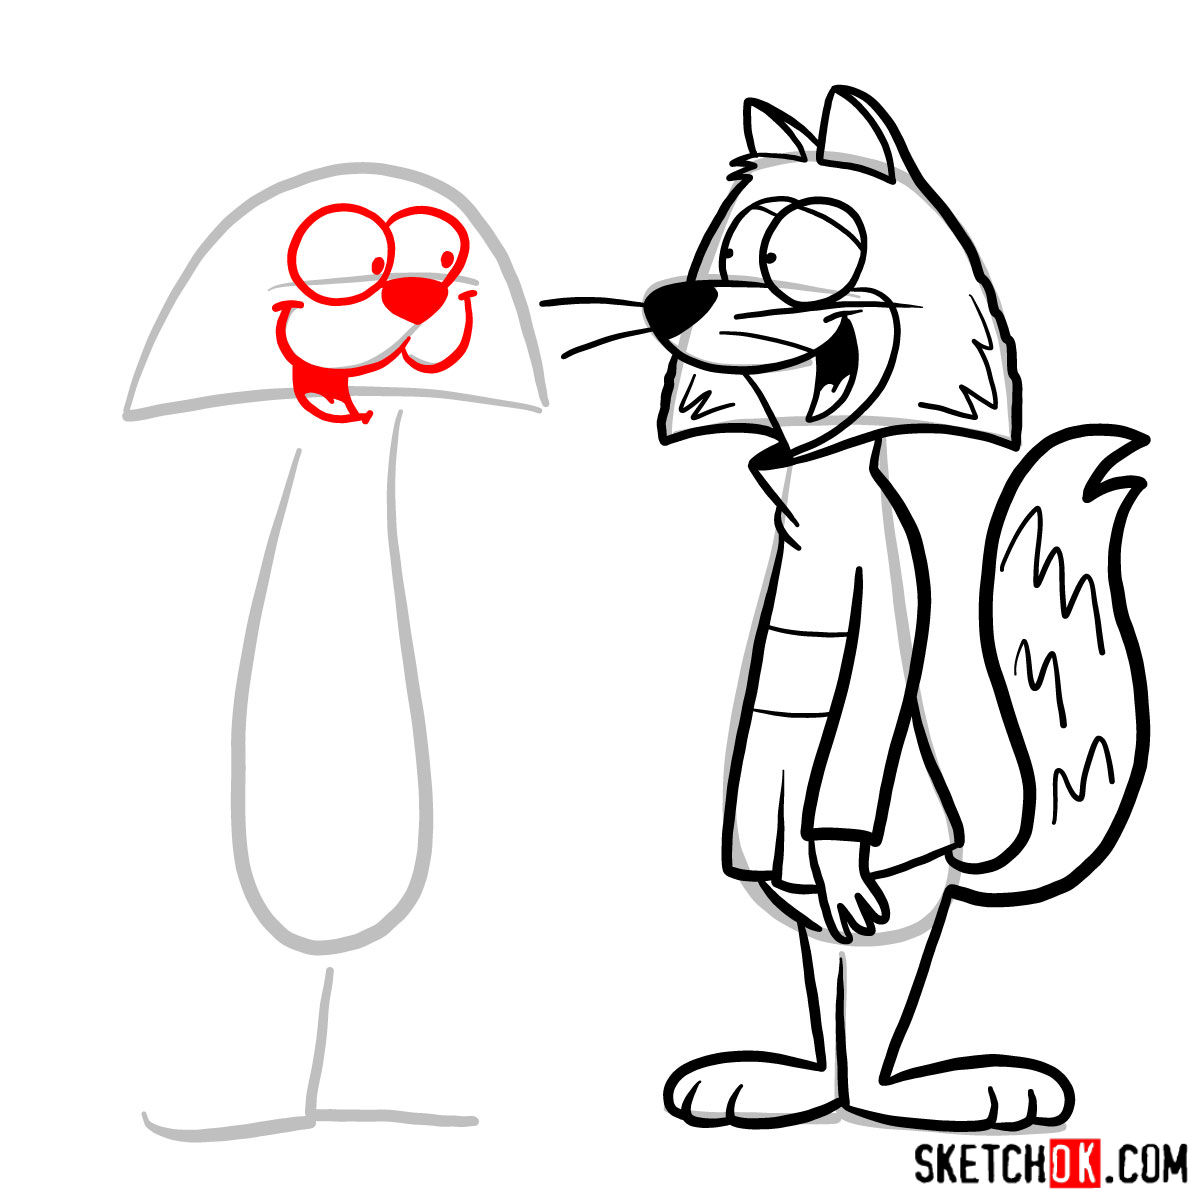 How to draw Fibber Fox and Choo Choo - step 10